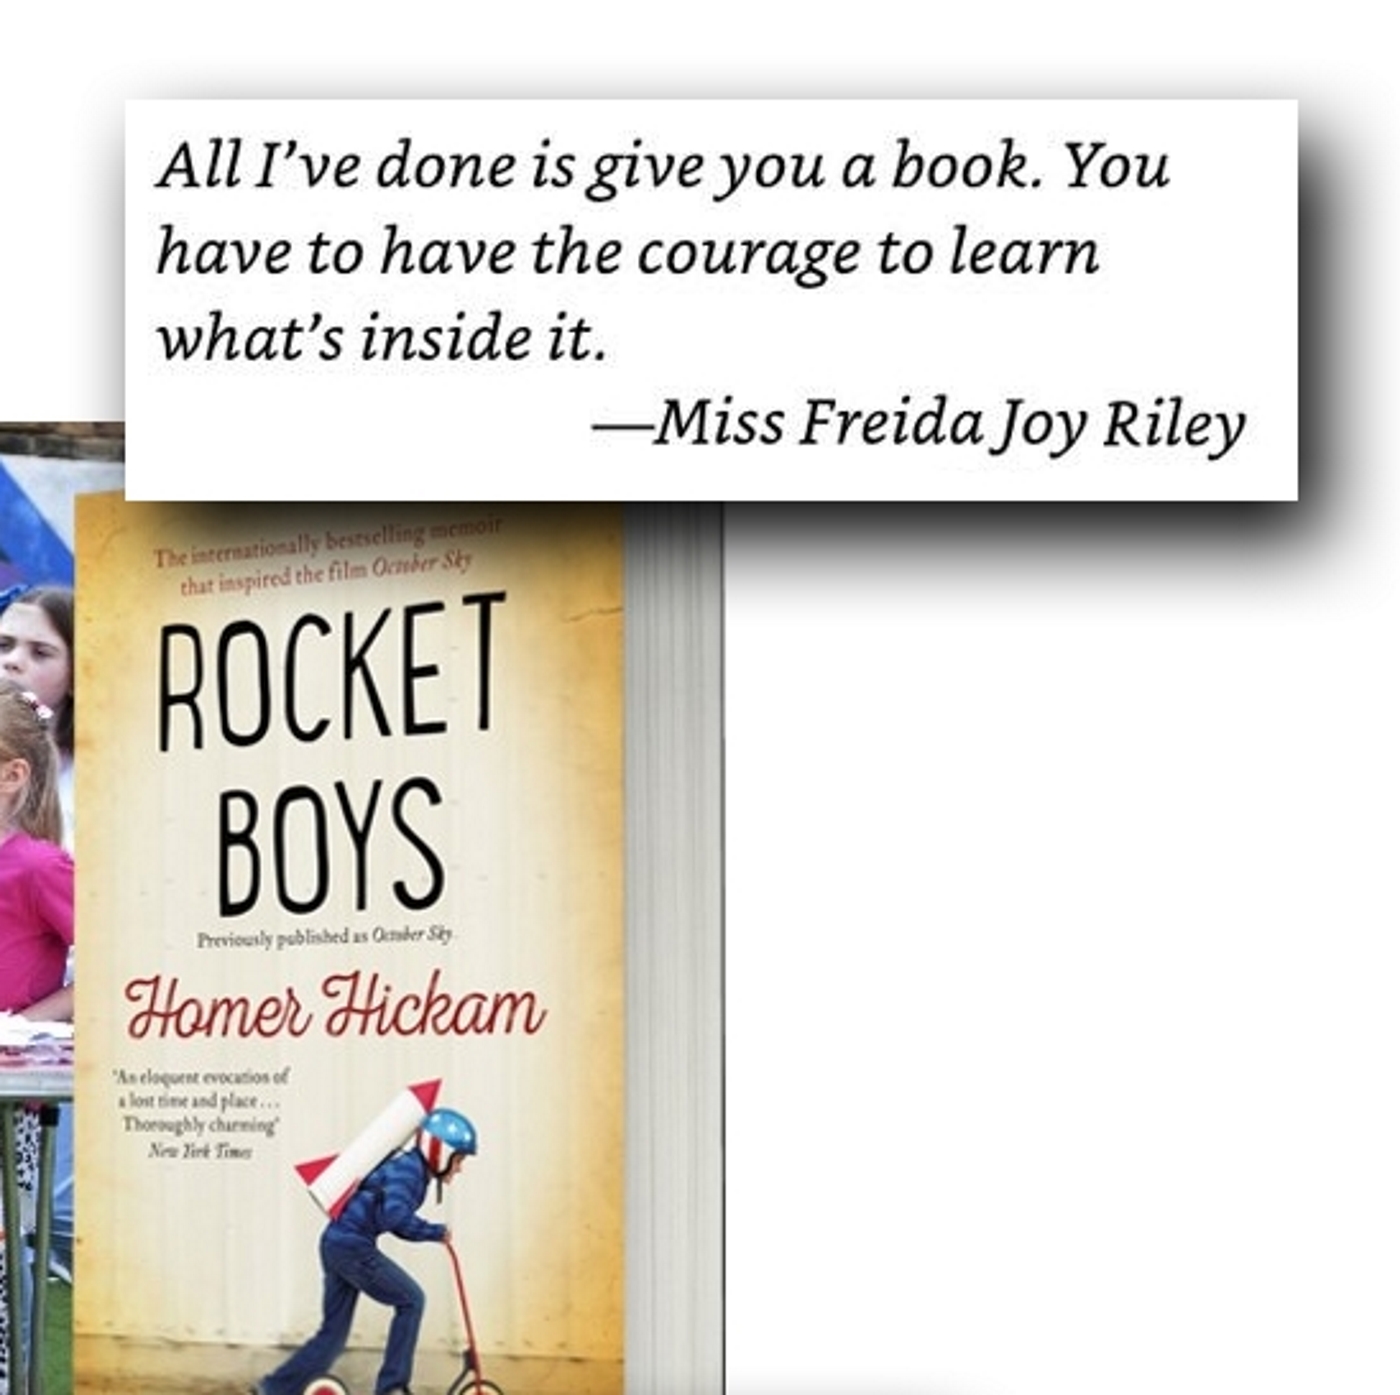 Rocket Boys book comp 1.jpg